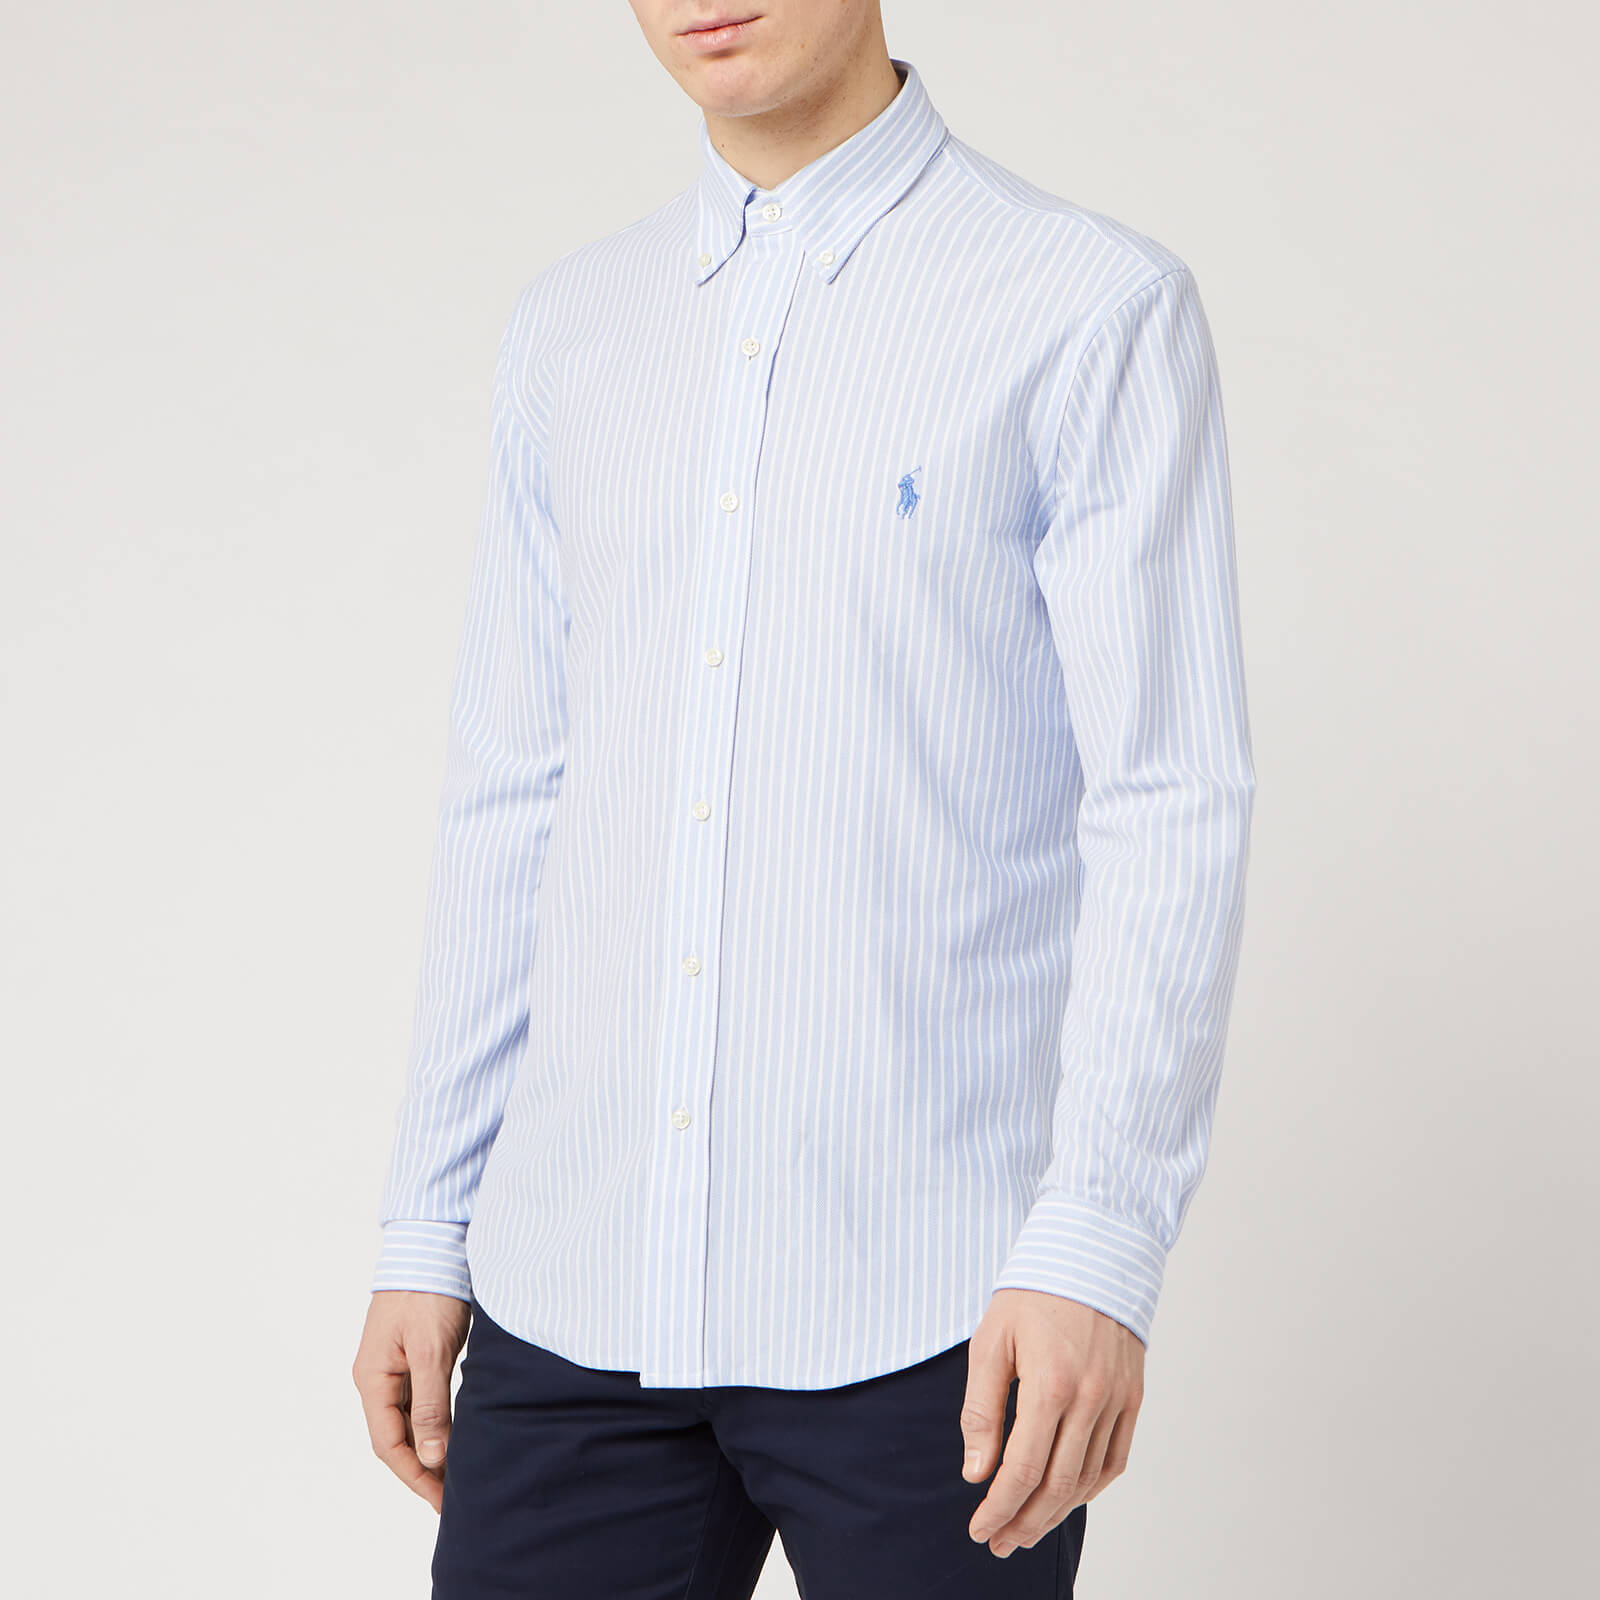 ralph lauren blue and white shirt